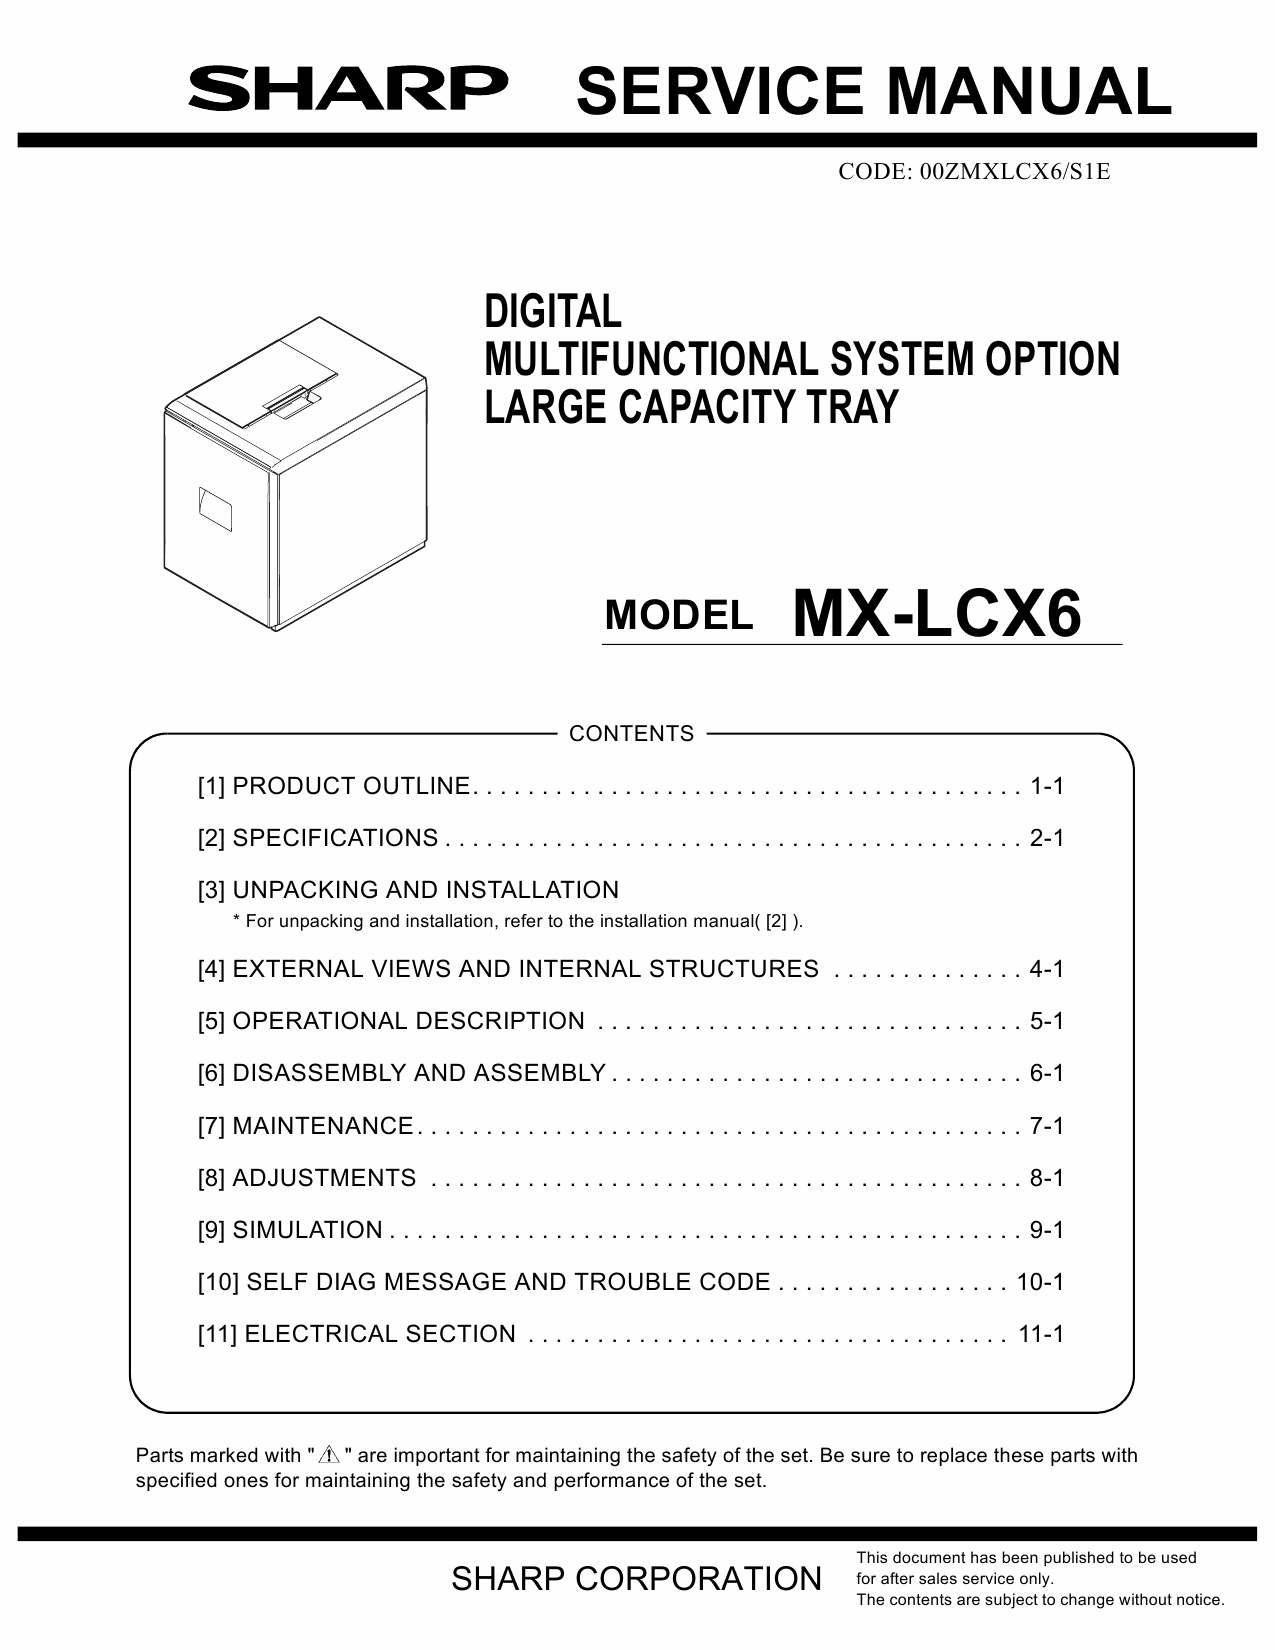 SHARP MX LCX6 Service Manual-1